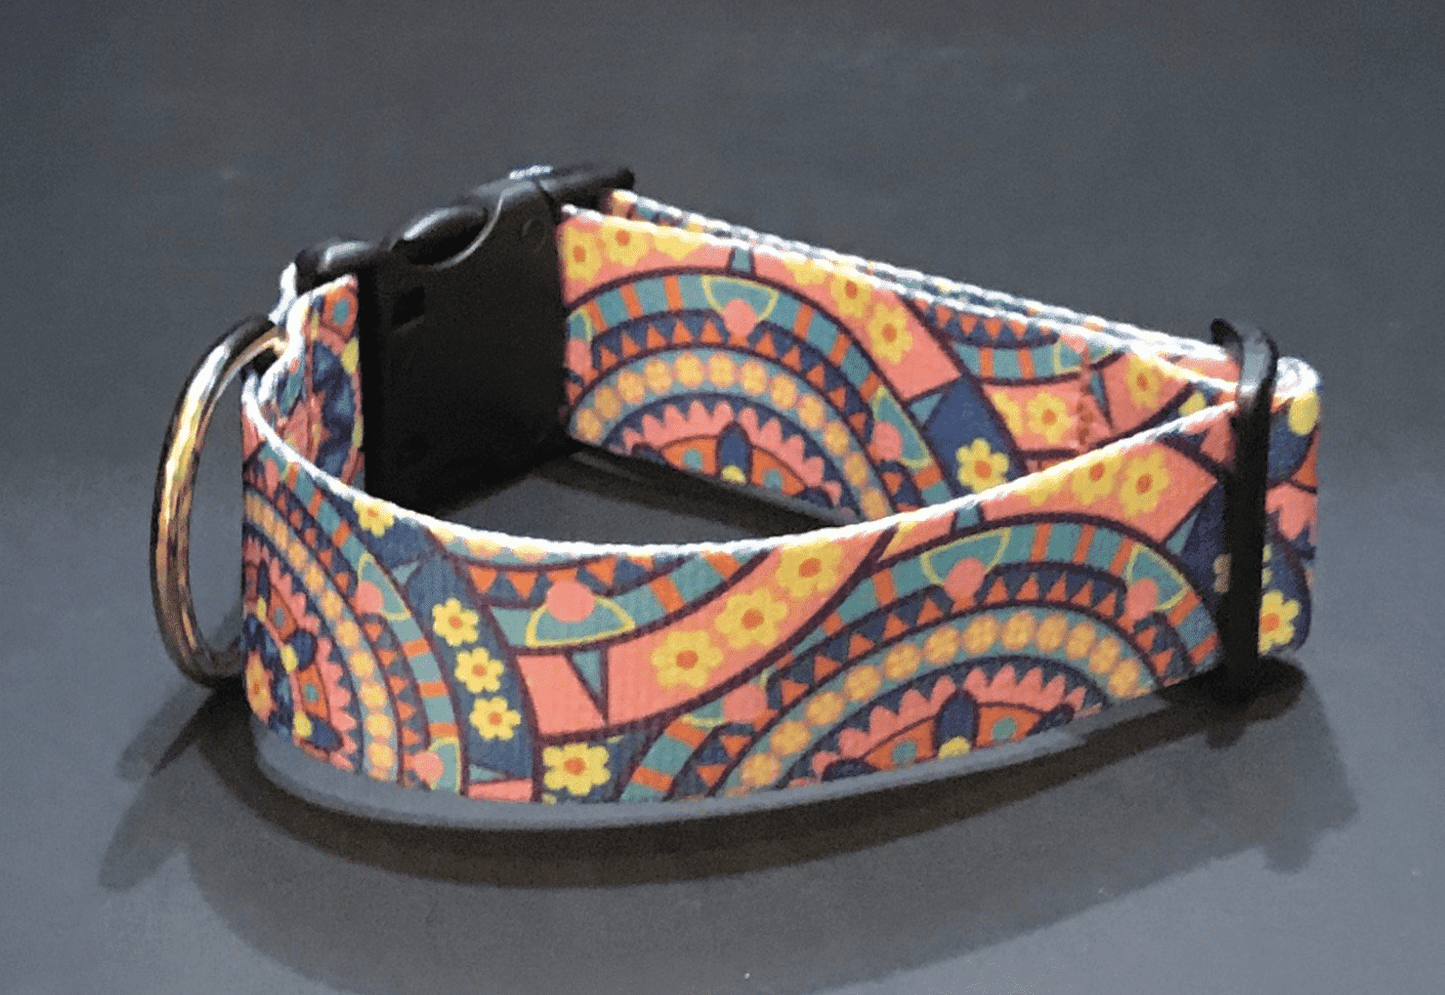 Trippy Hippy Dog Collars (1.5" Wide)